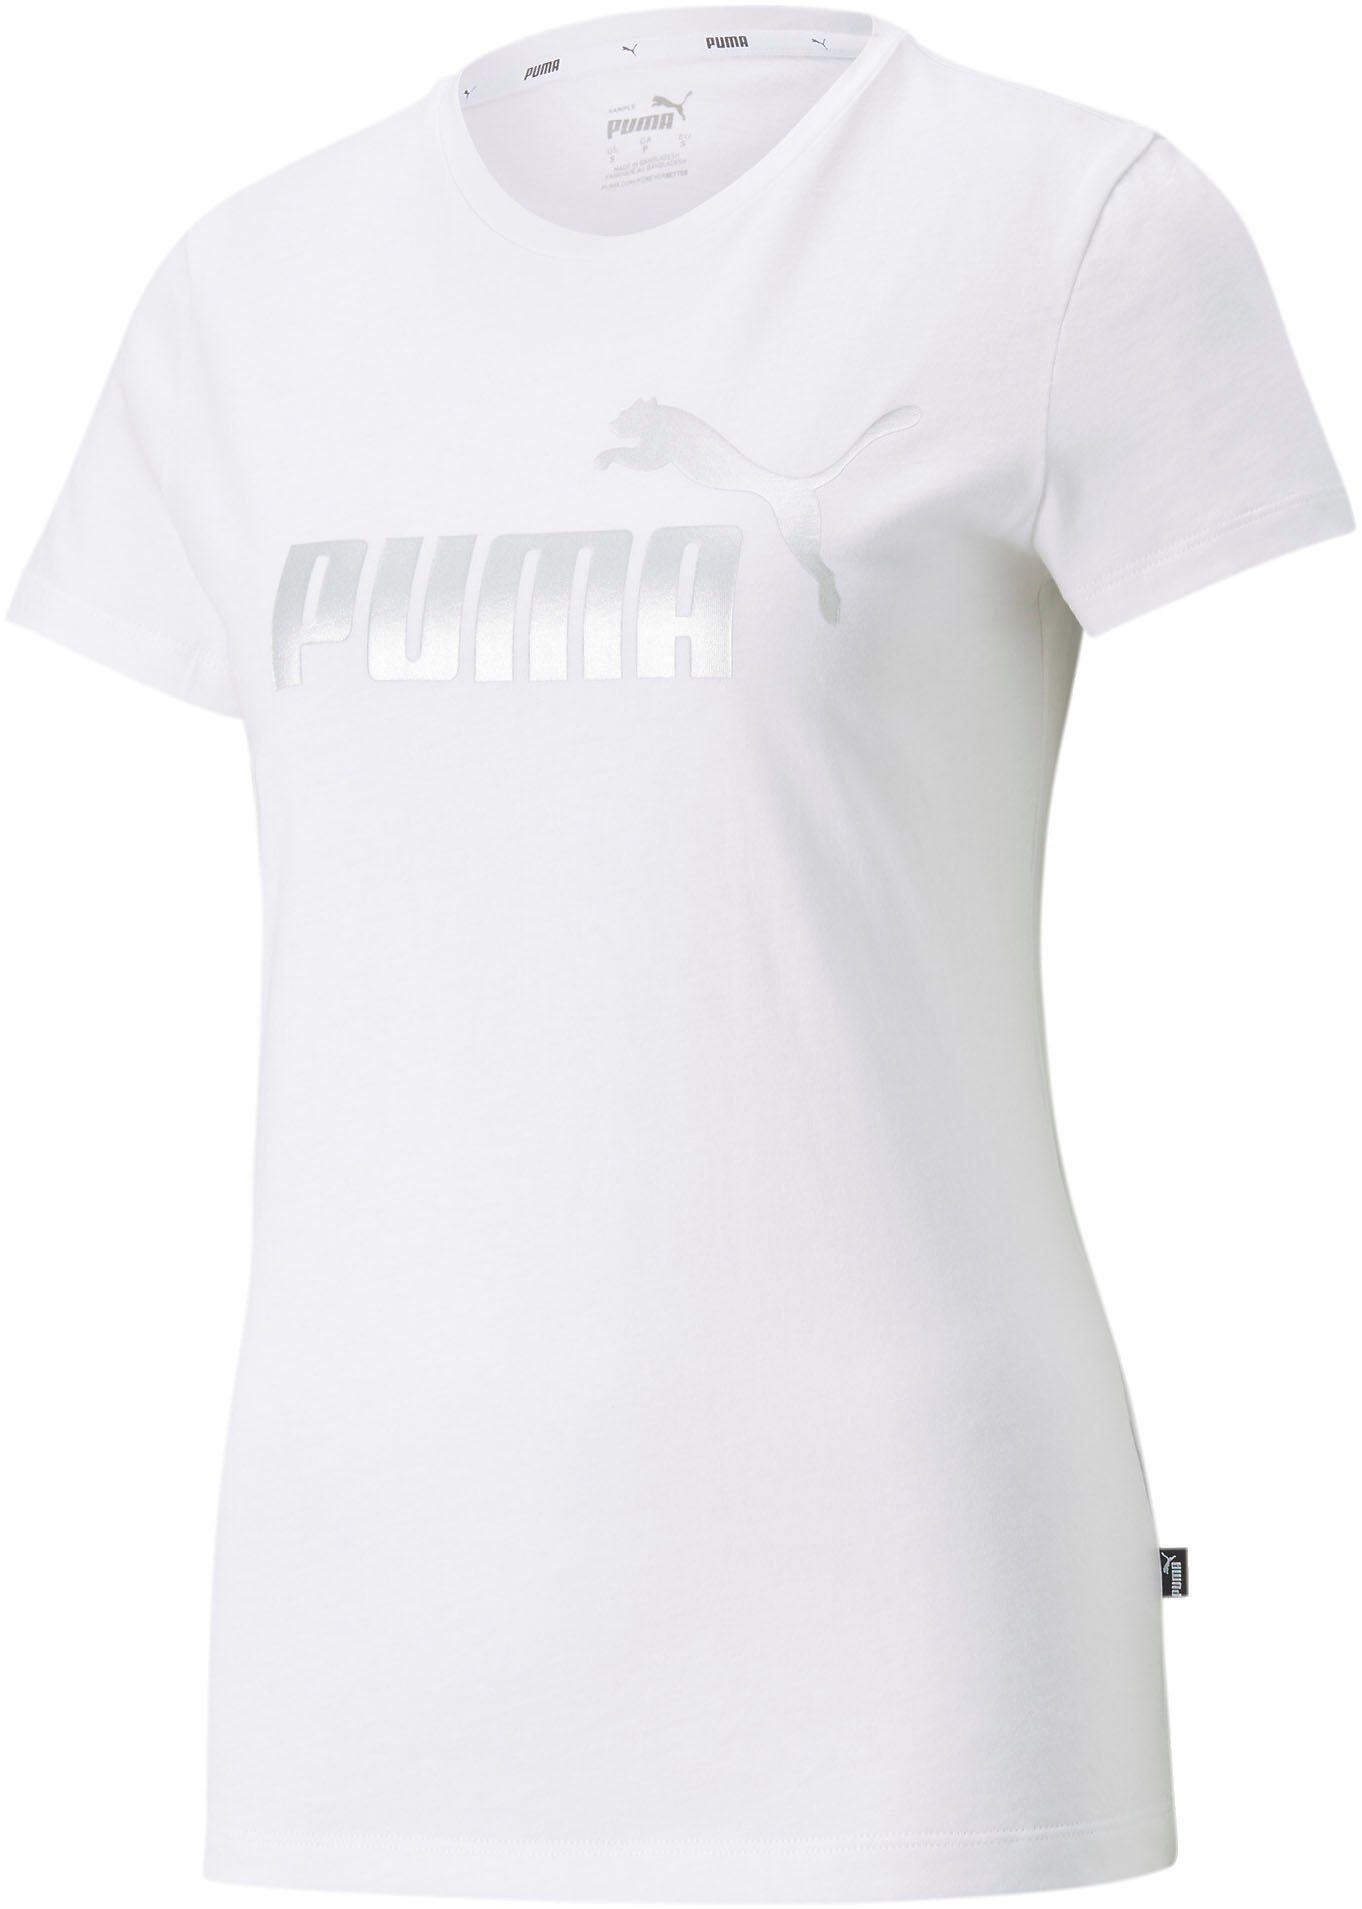 PUMA T-Shirt metallic LOGO Puma ESS+ White-silver METALLIC TEE